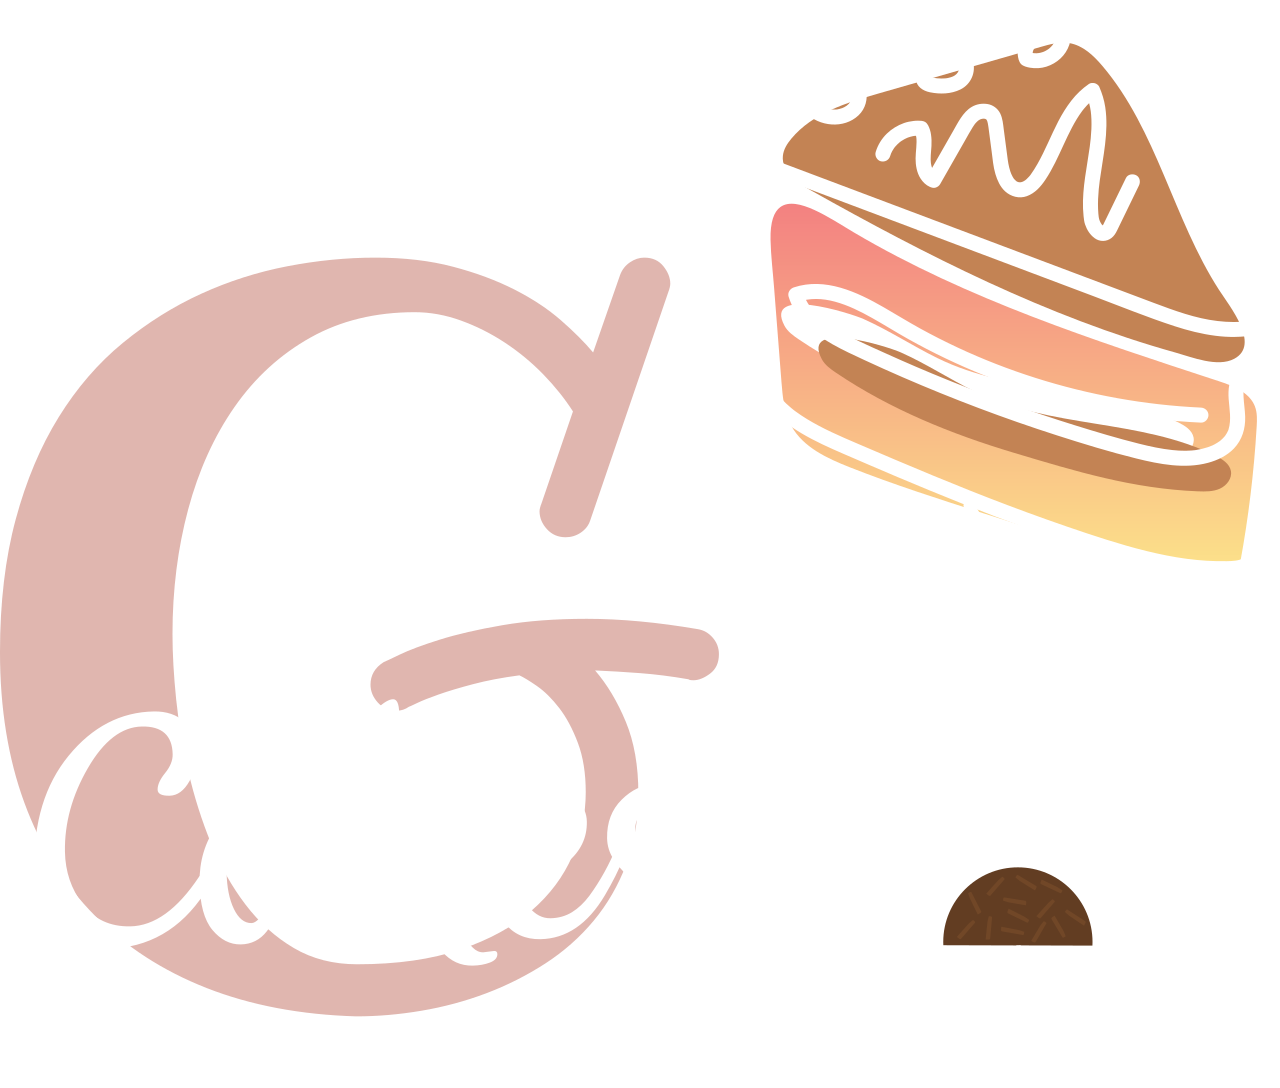 Cakes's logo